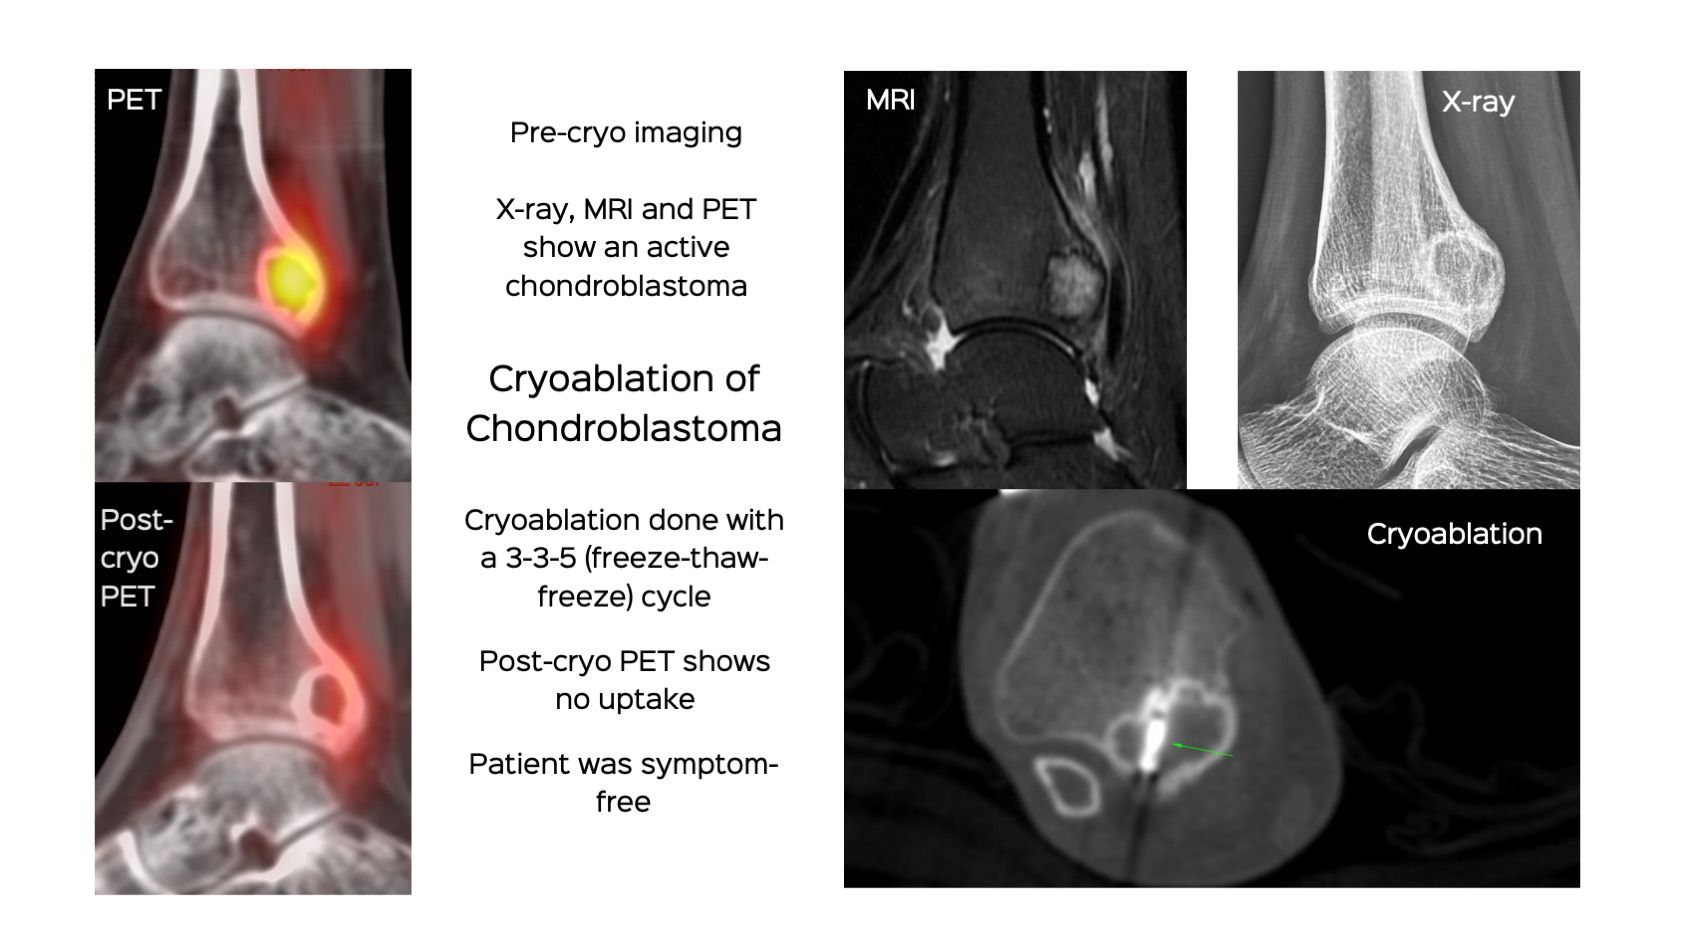 Case 107: Cryoablation of Chondroblastoma